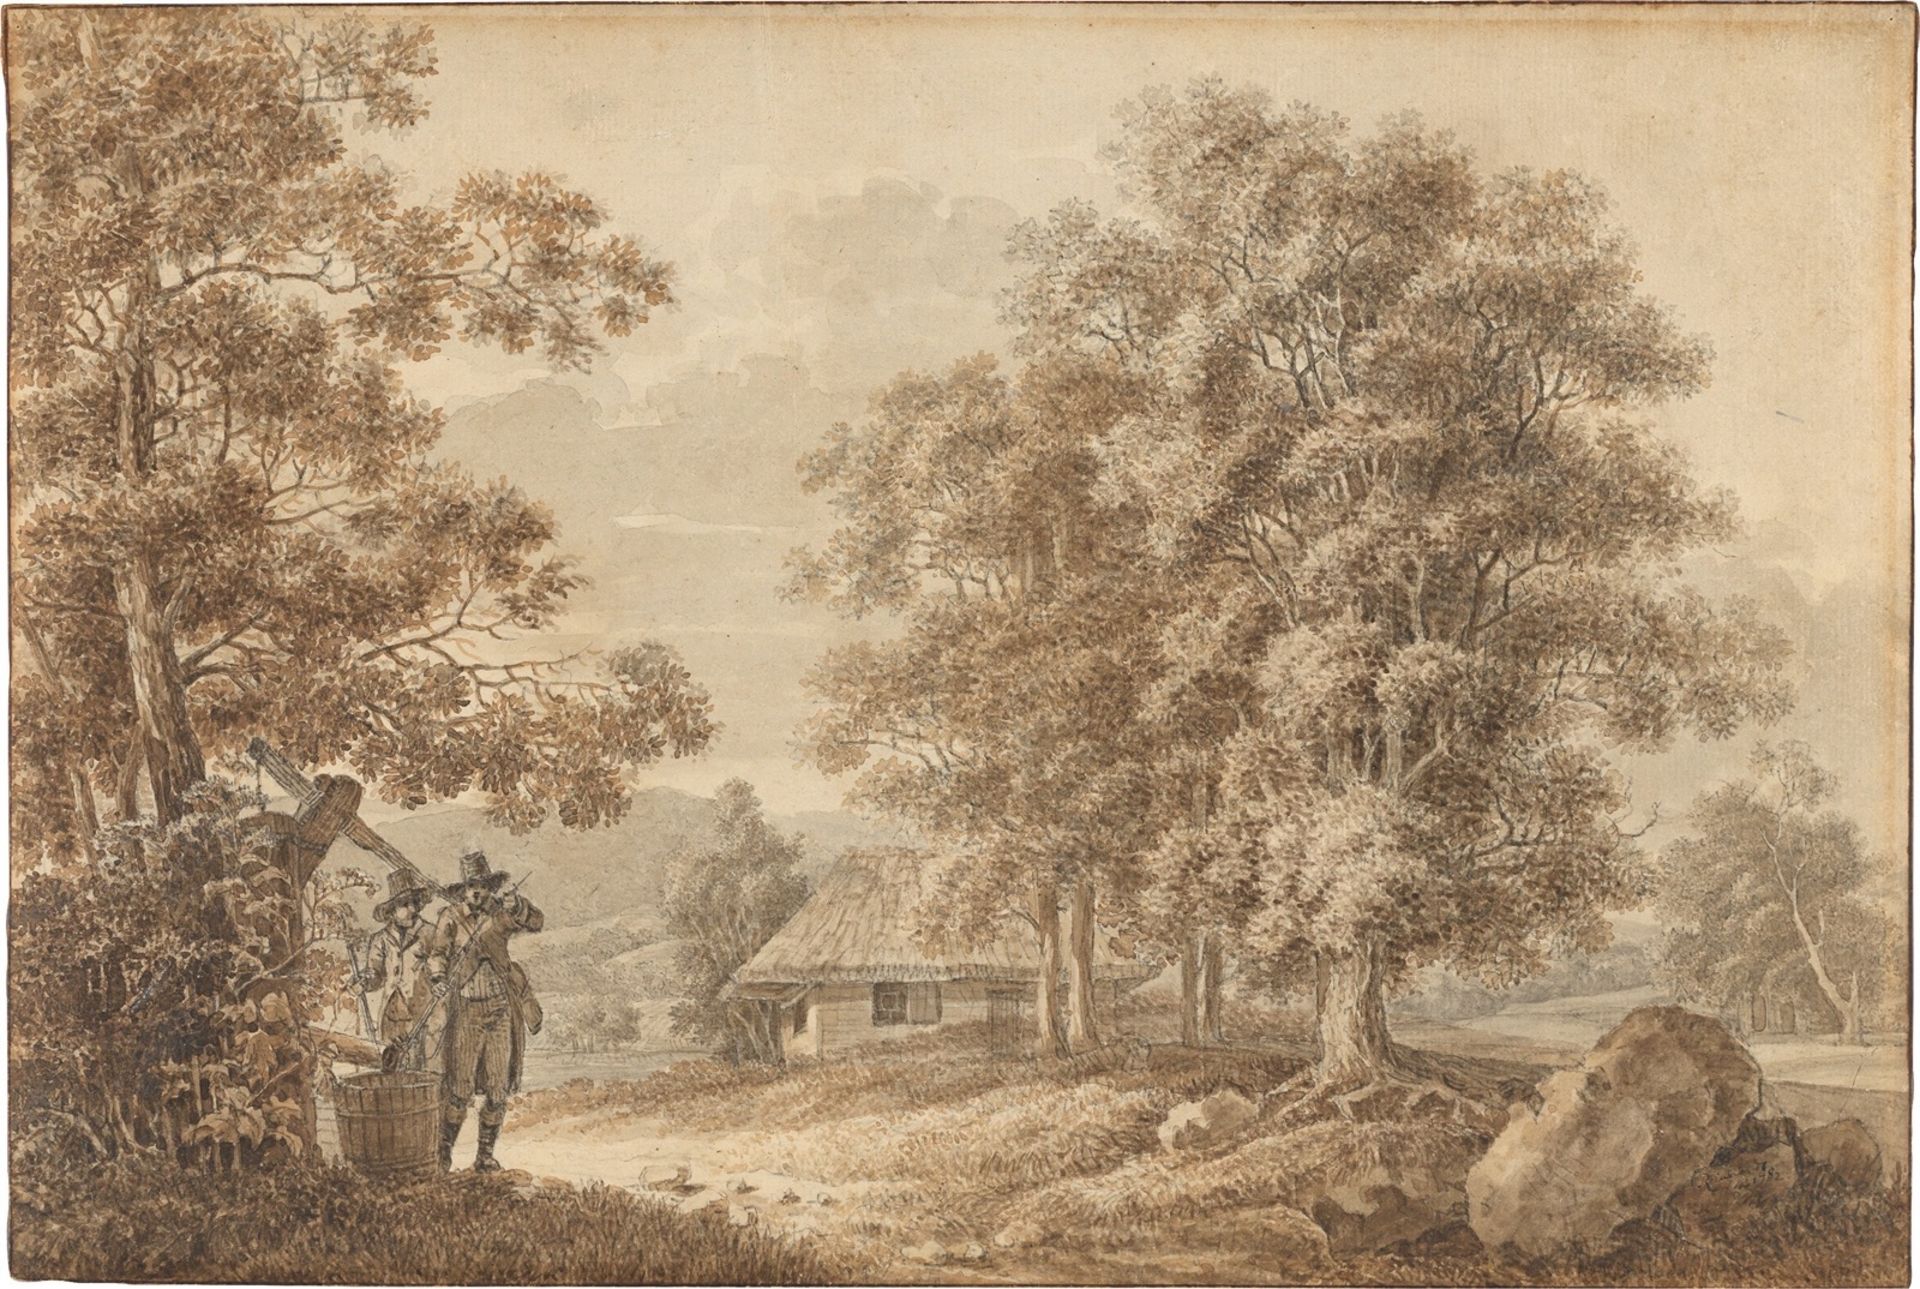 Johann Christian Reinhart. Landscape with two men at a draw well. 1782